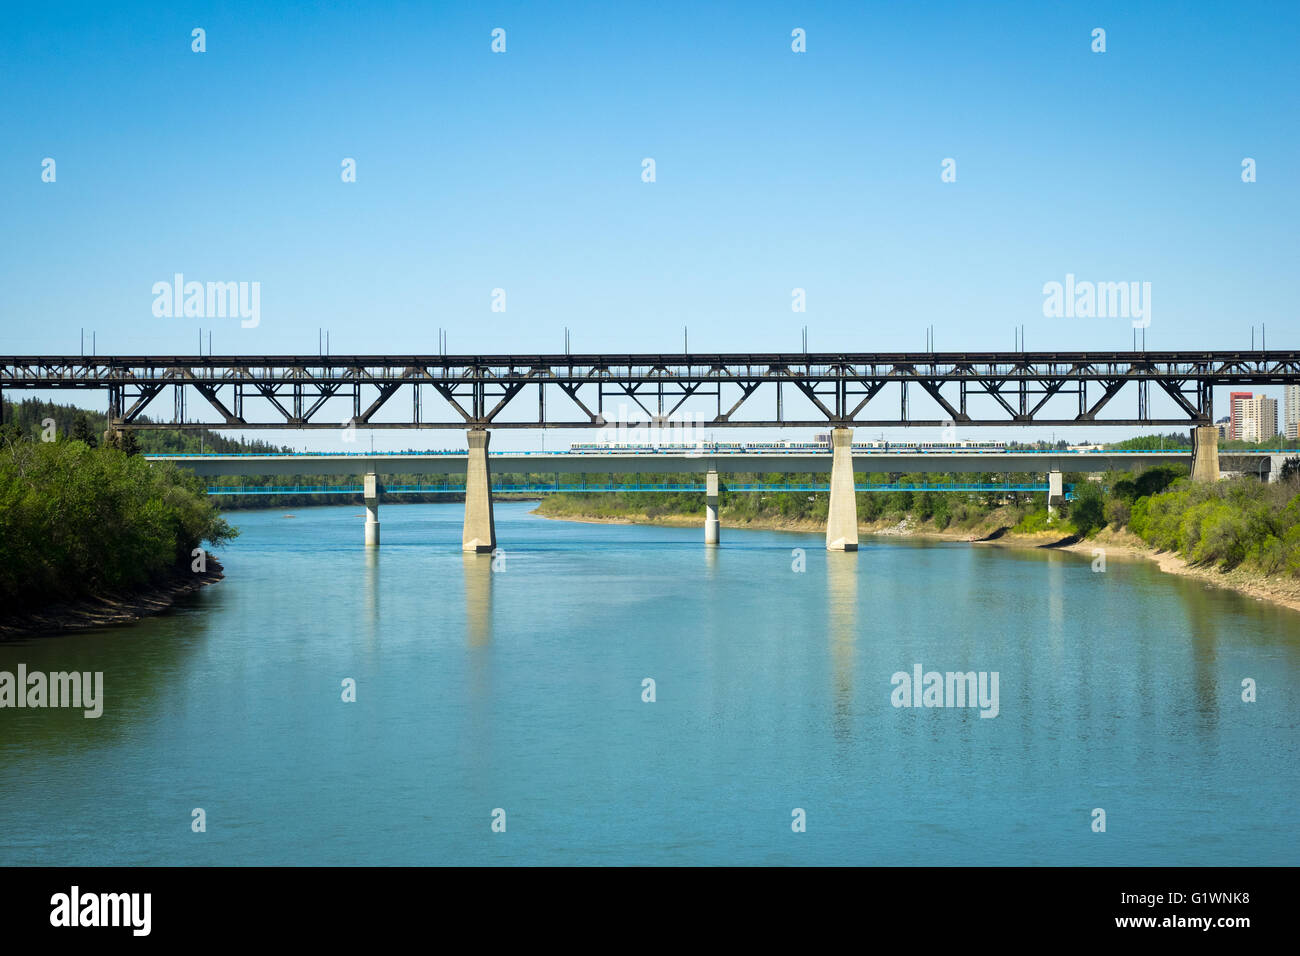 A view of the High Level Bridge and the North Saskatchewan River in Edmonton, Alberta, Canada. Stock Photo